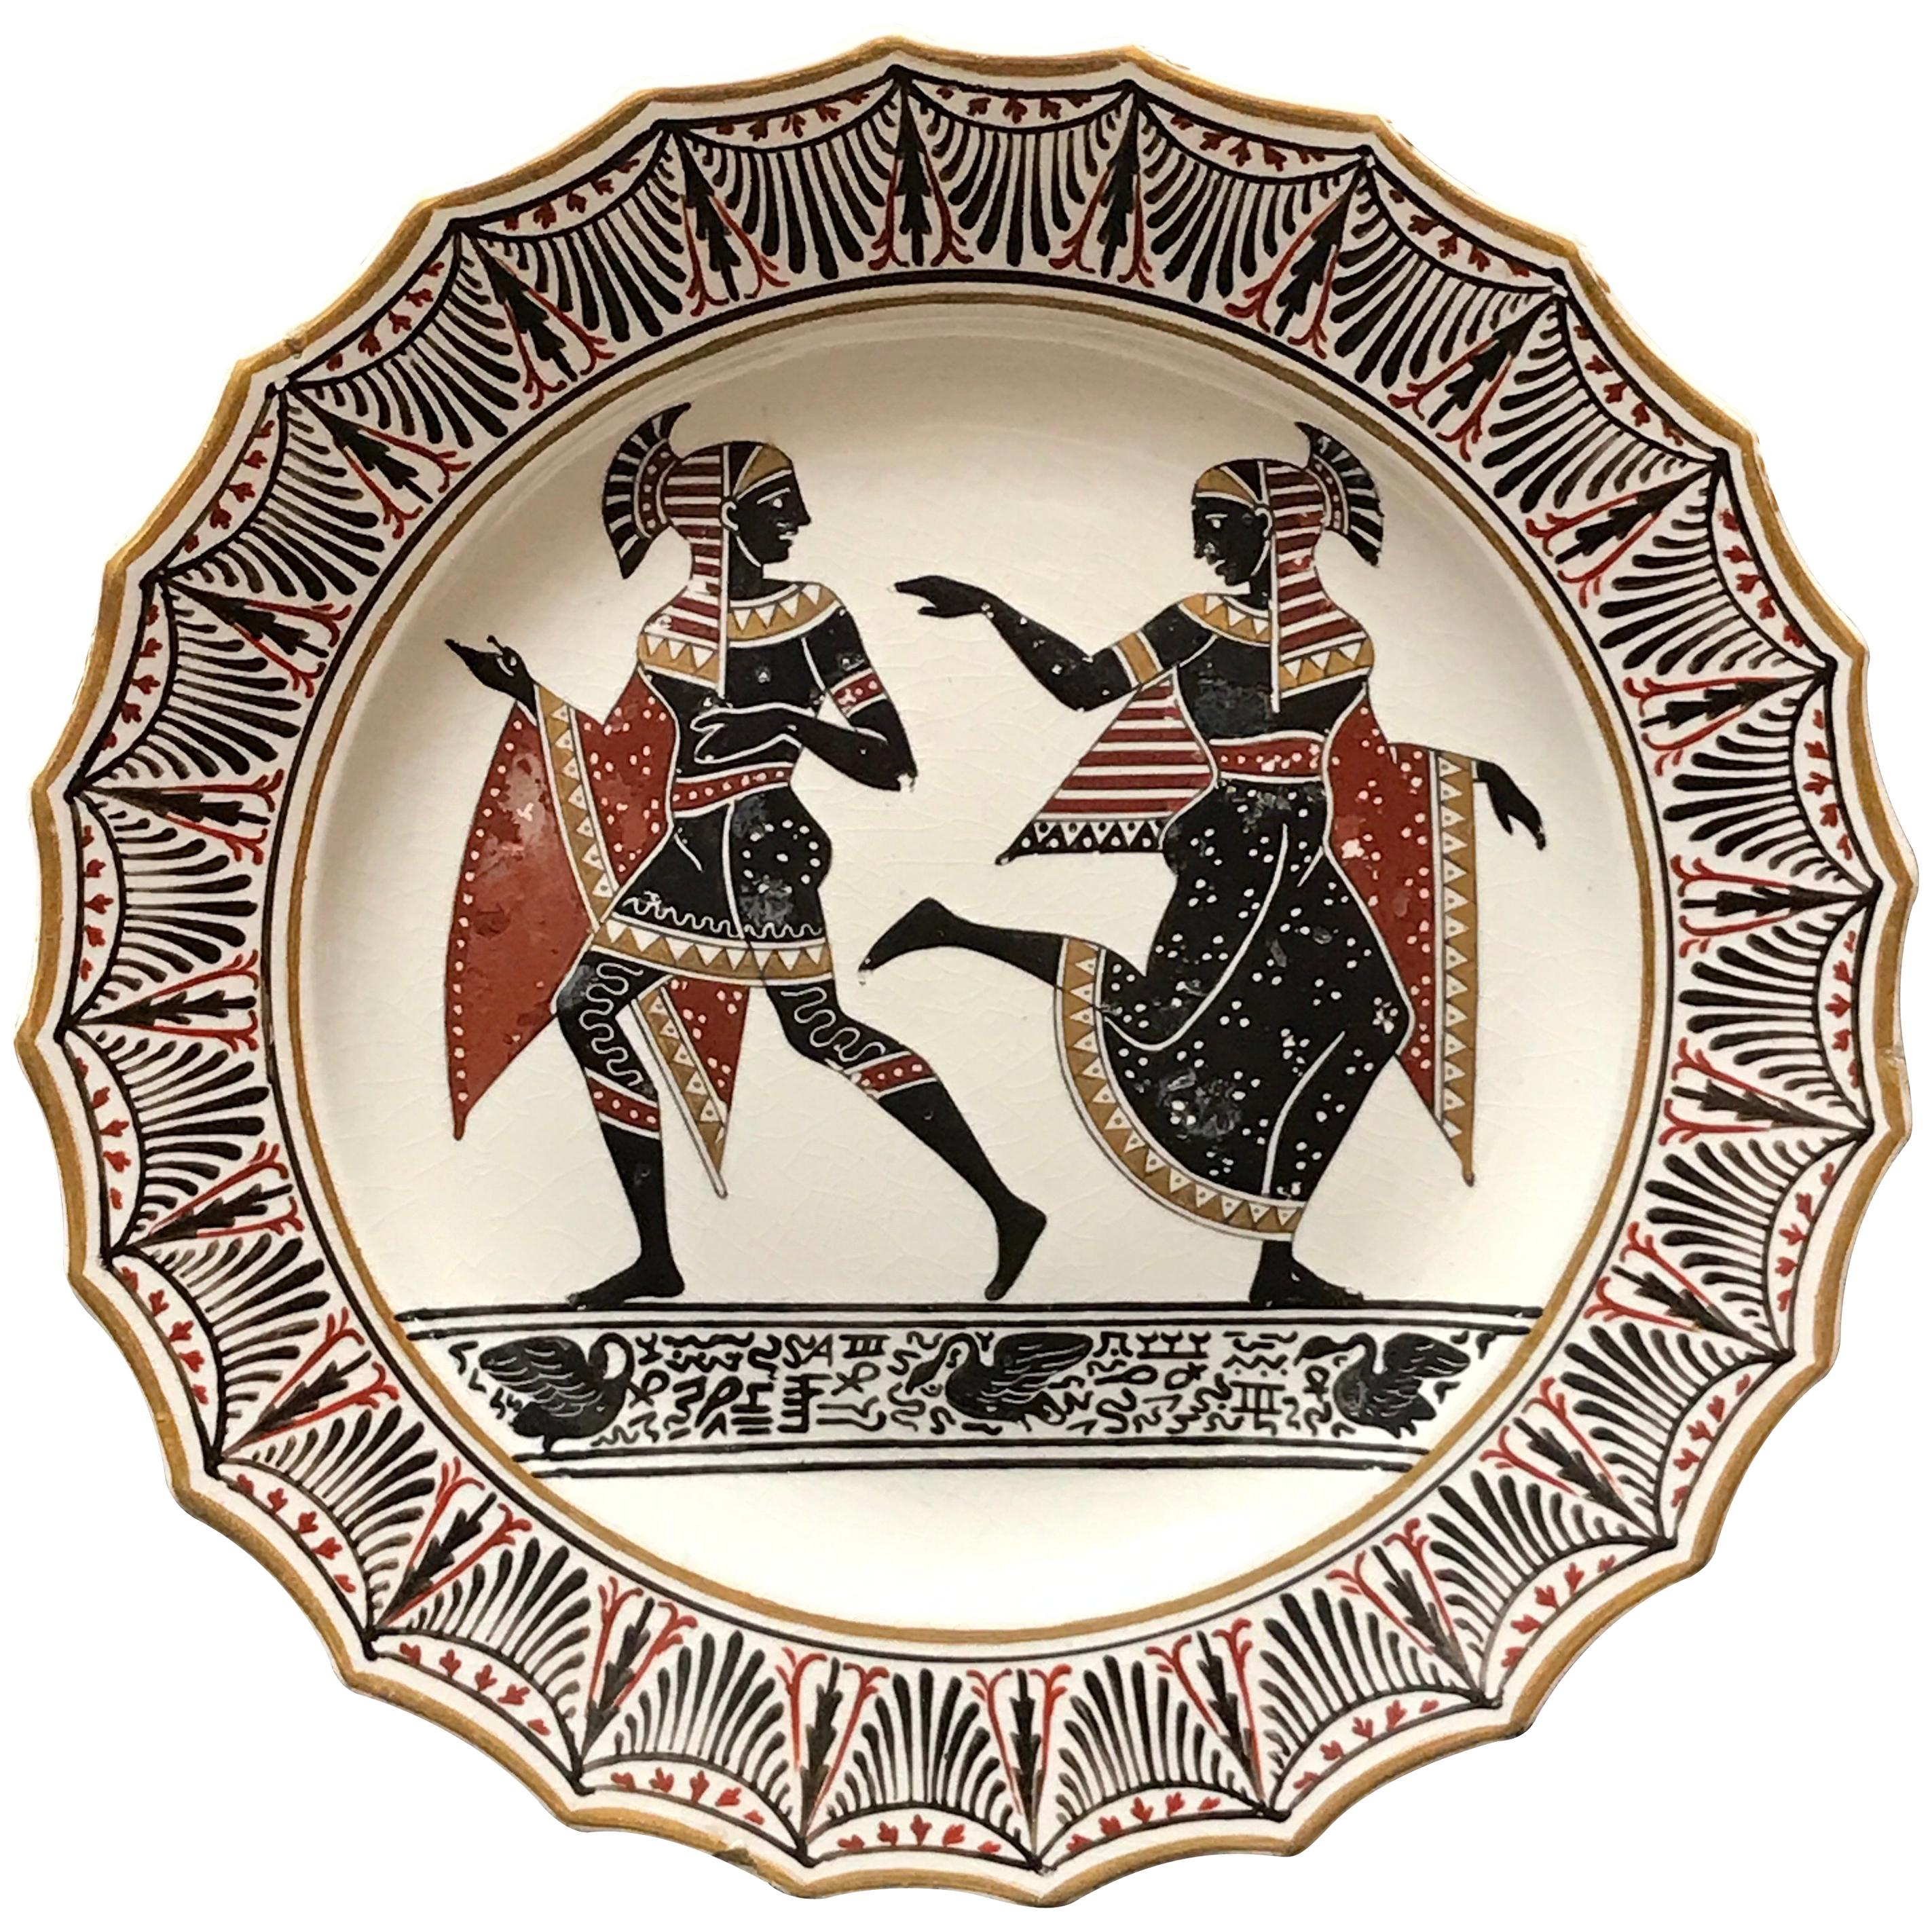 Giustiniani Egyptomania-Keramikteller mit vergoldeten Akzenten, Schwan links im Angebot